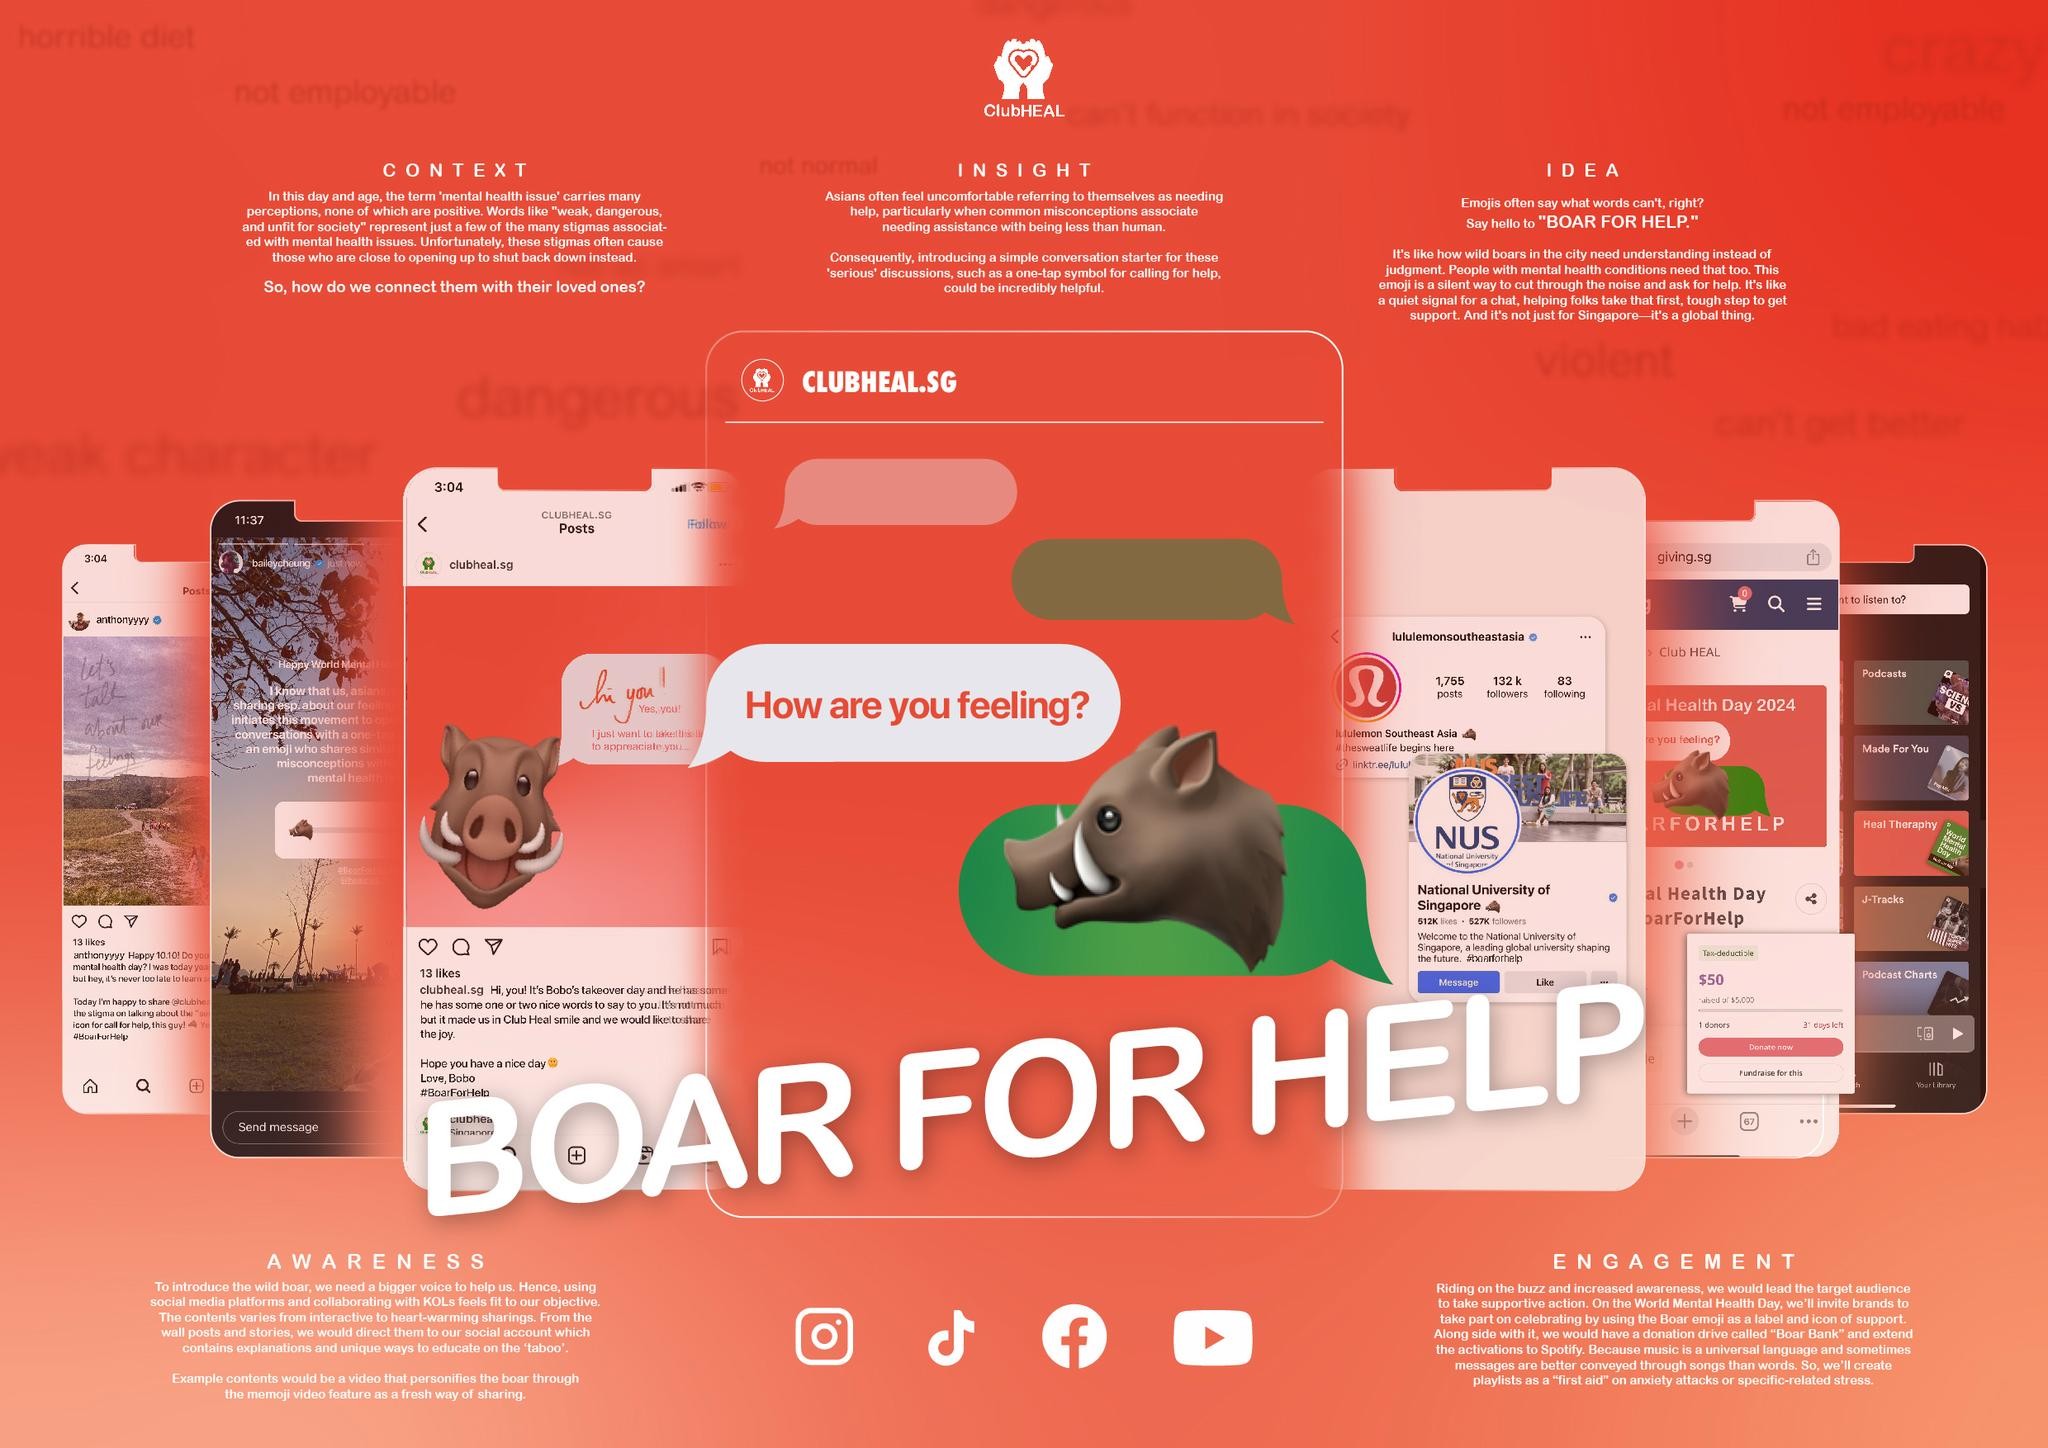 Boar For Help